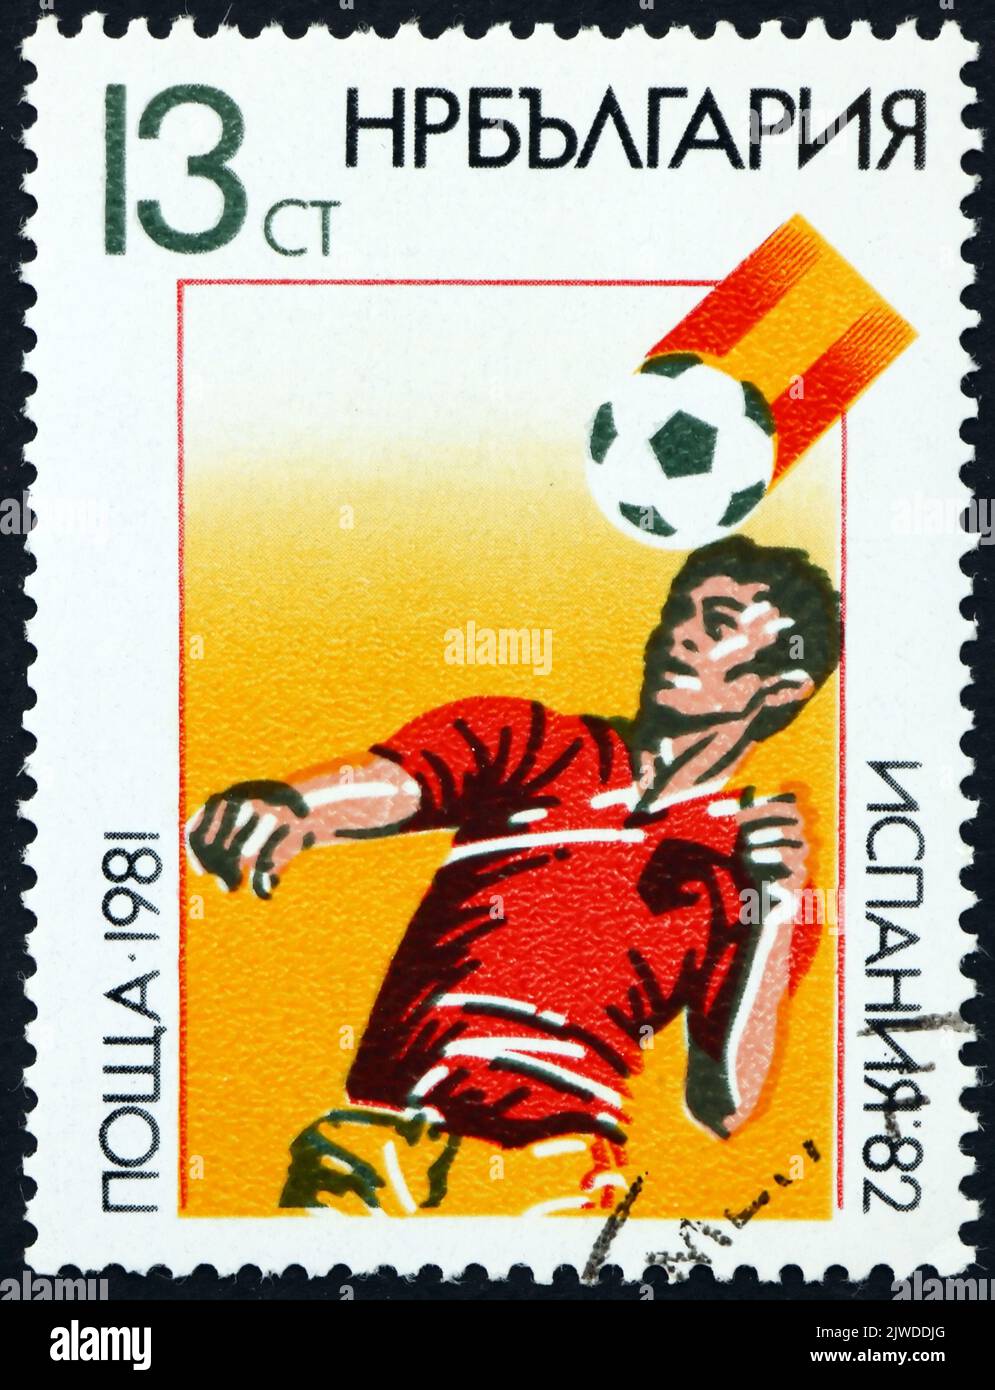 BULGARIA - CIRCA 1981: a stamp printed in Bulgaria shows soccer player, Espana ’82 World Cup Soccer, circa 1981 Stock Photo